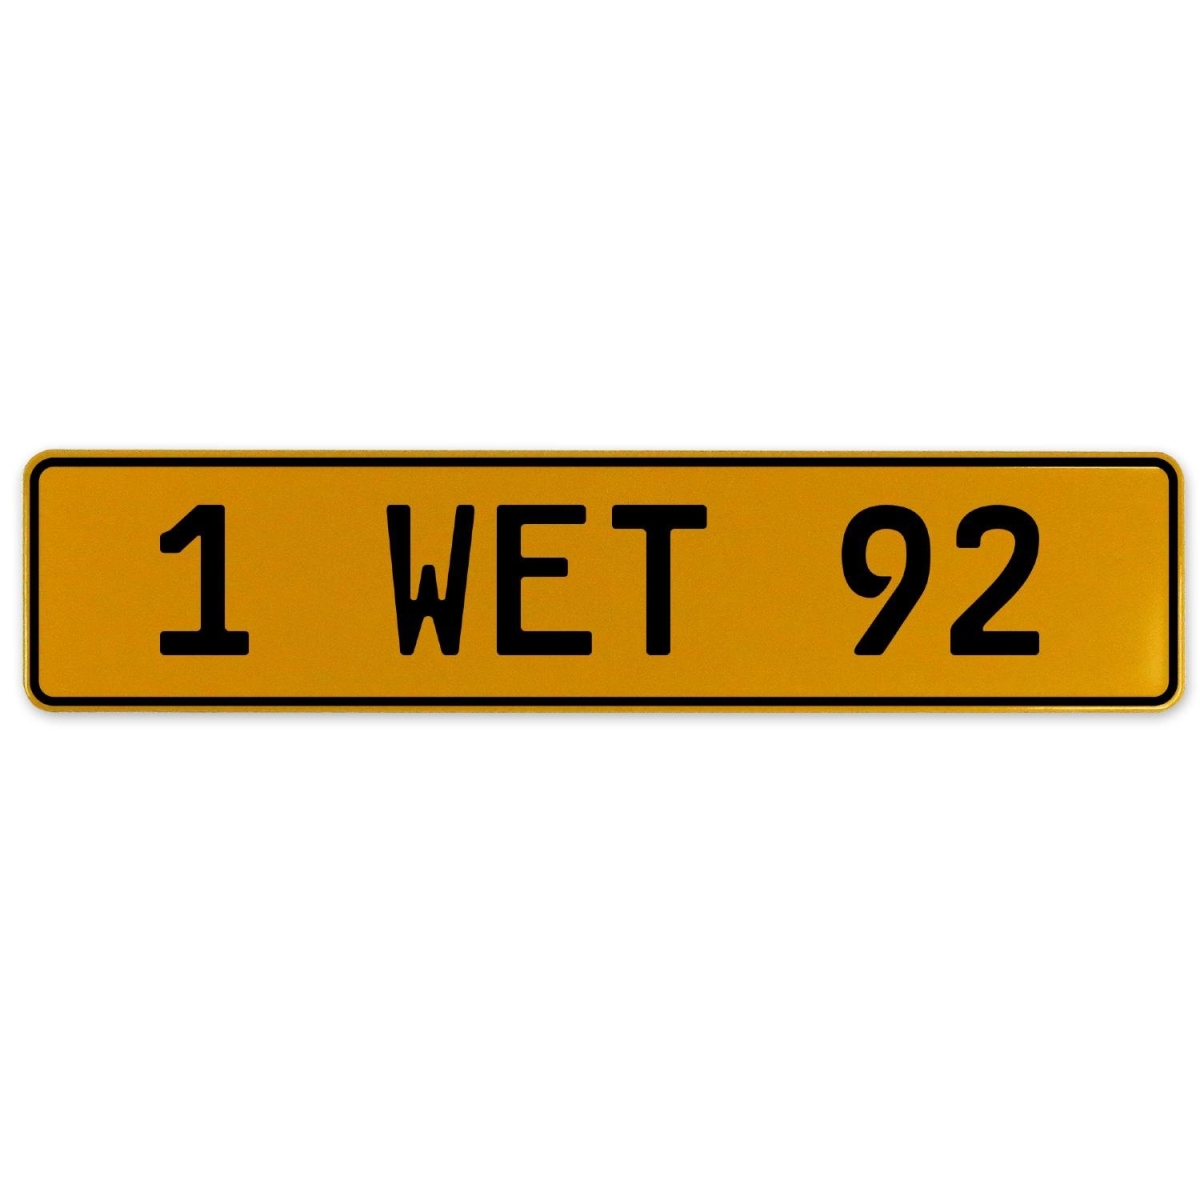 1 Wet 92 - Yellow Aluminum Street Sign Mancave Euro Plate Name Door Sign Wall